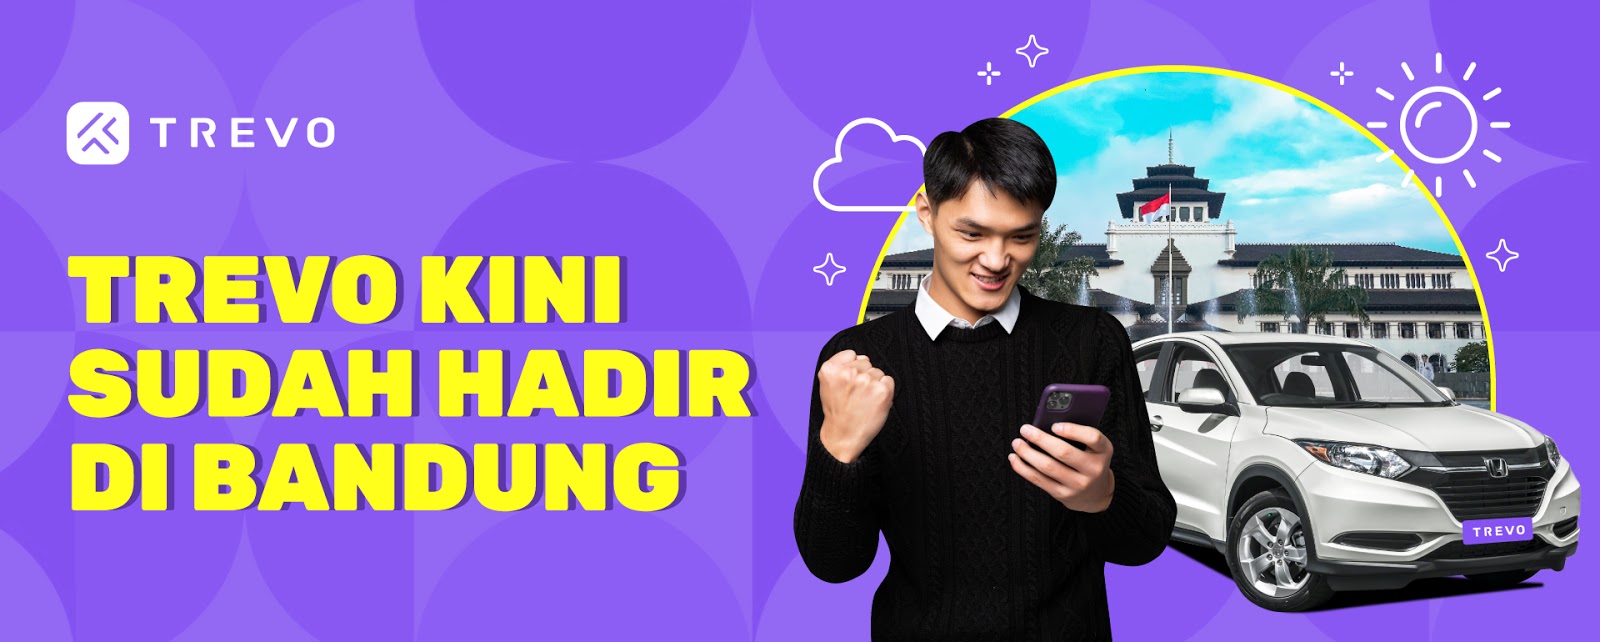 TREVO Kini Sudah Hadir di Bandung - TREVO Stories ID